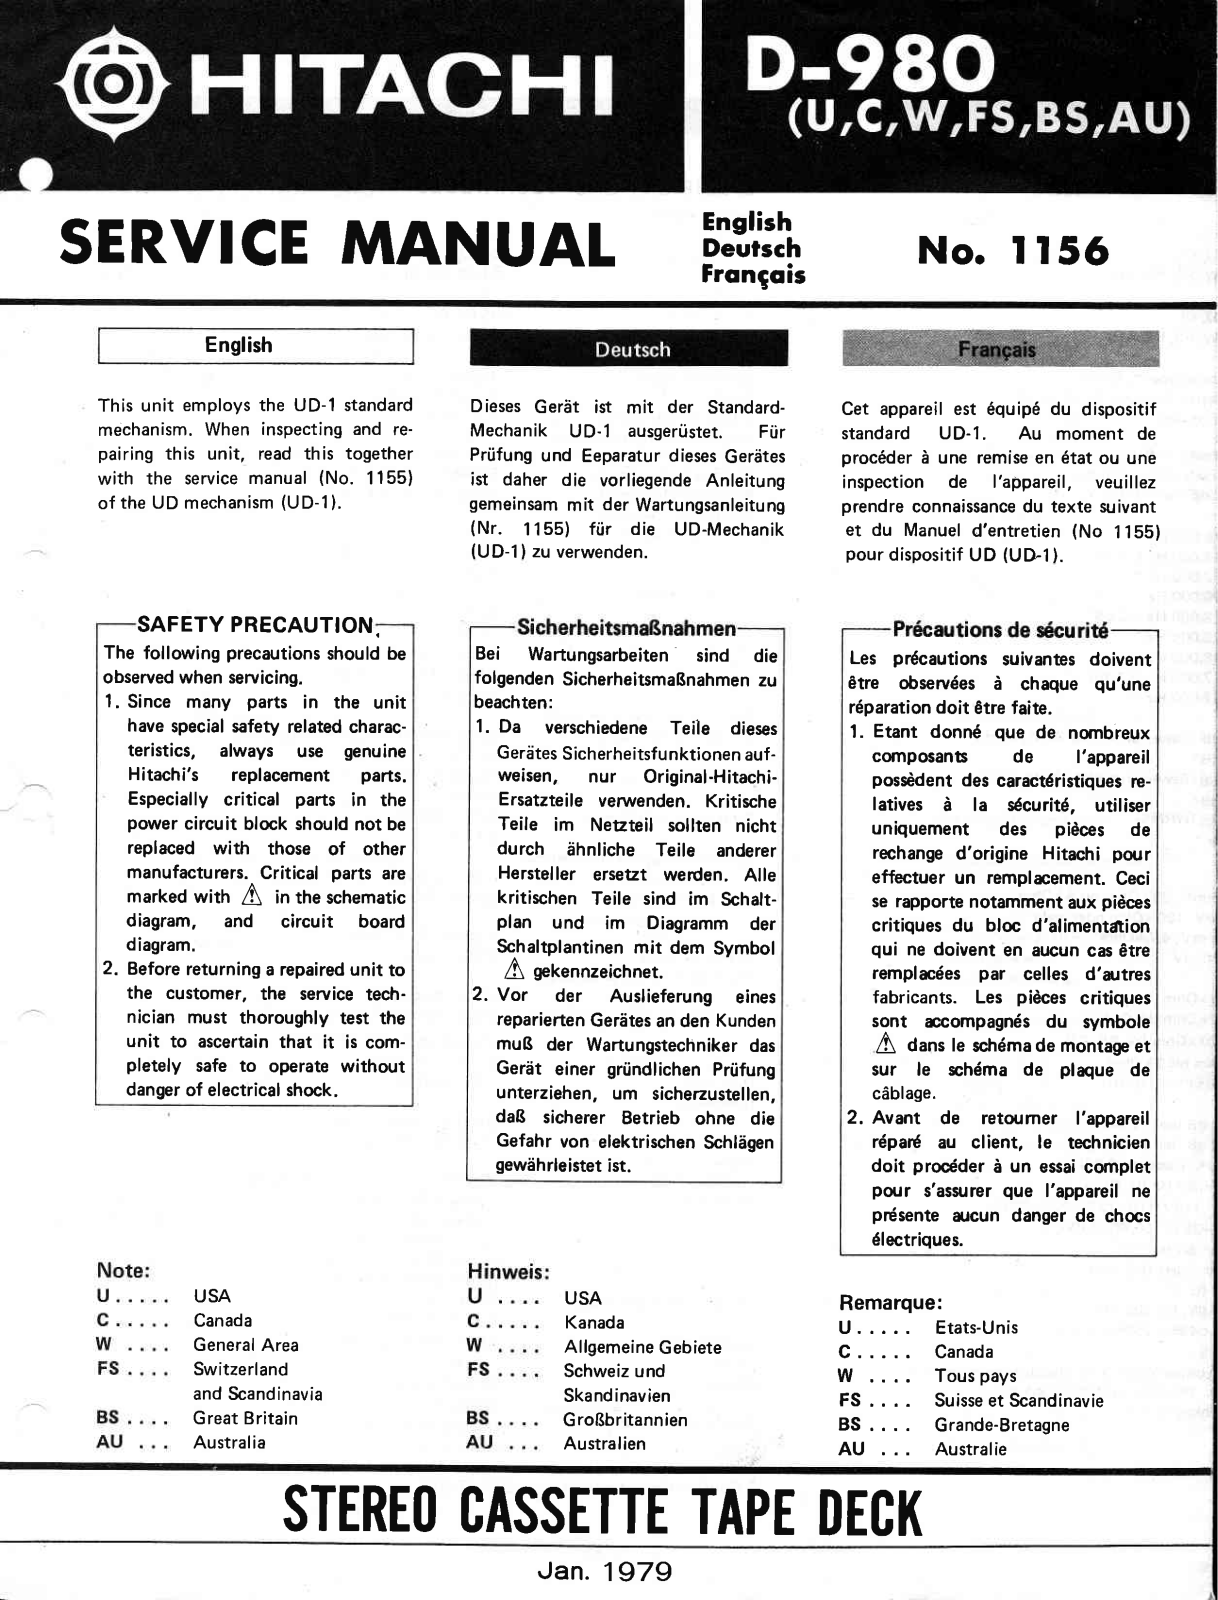 Hitachi D-980 Service manual